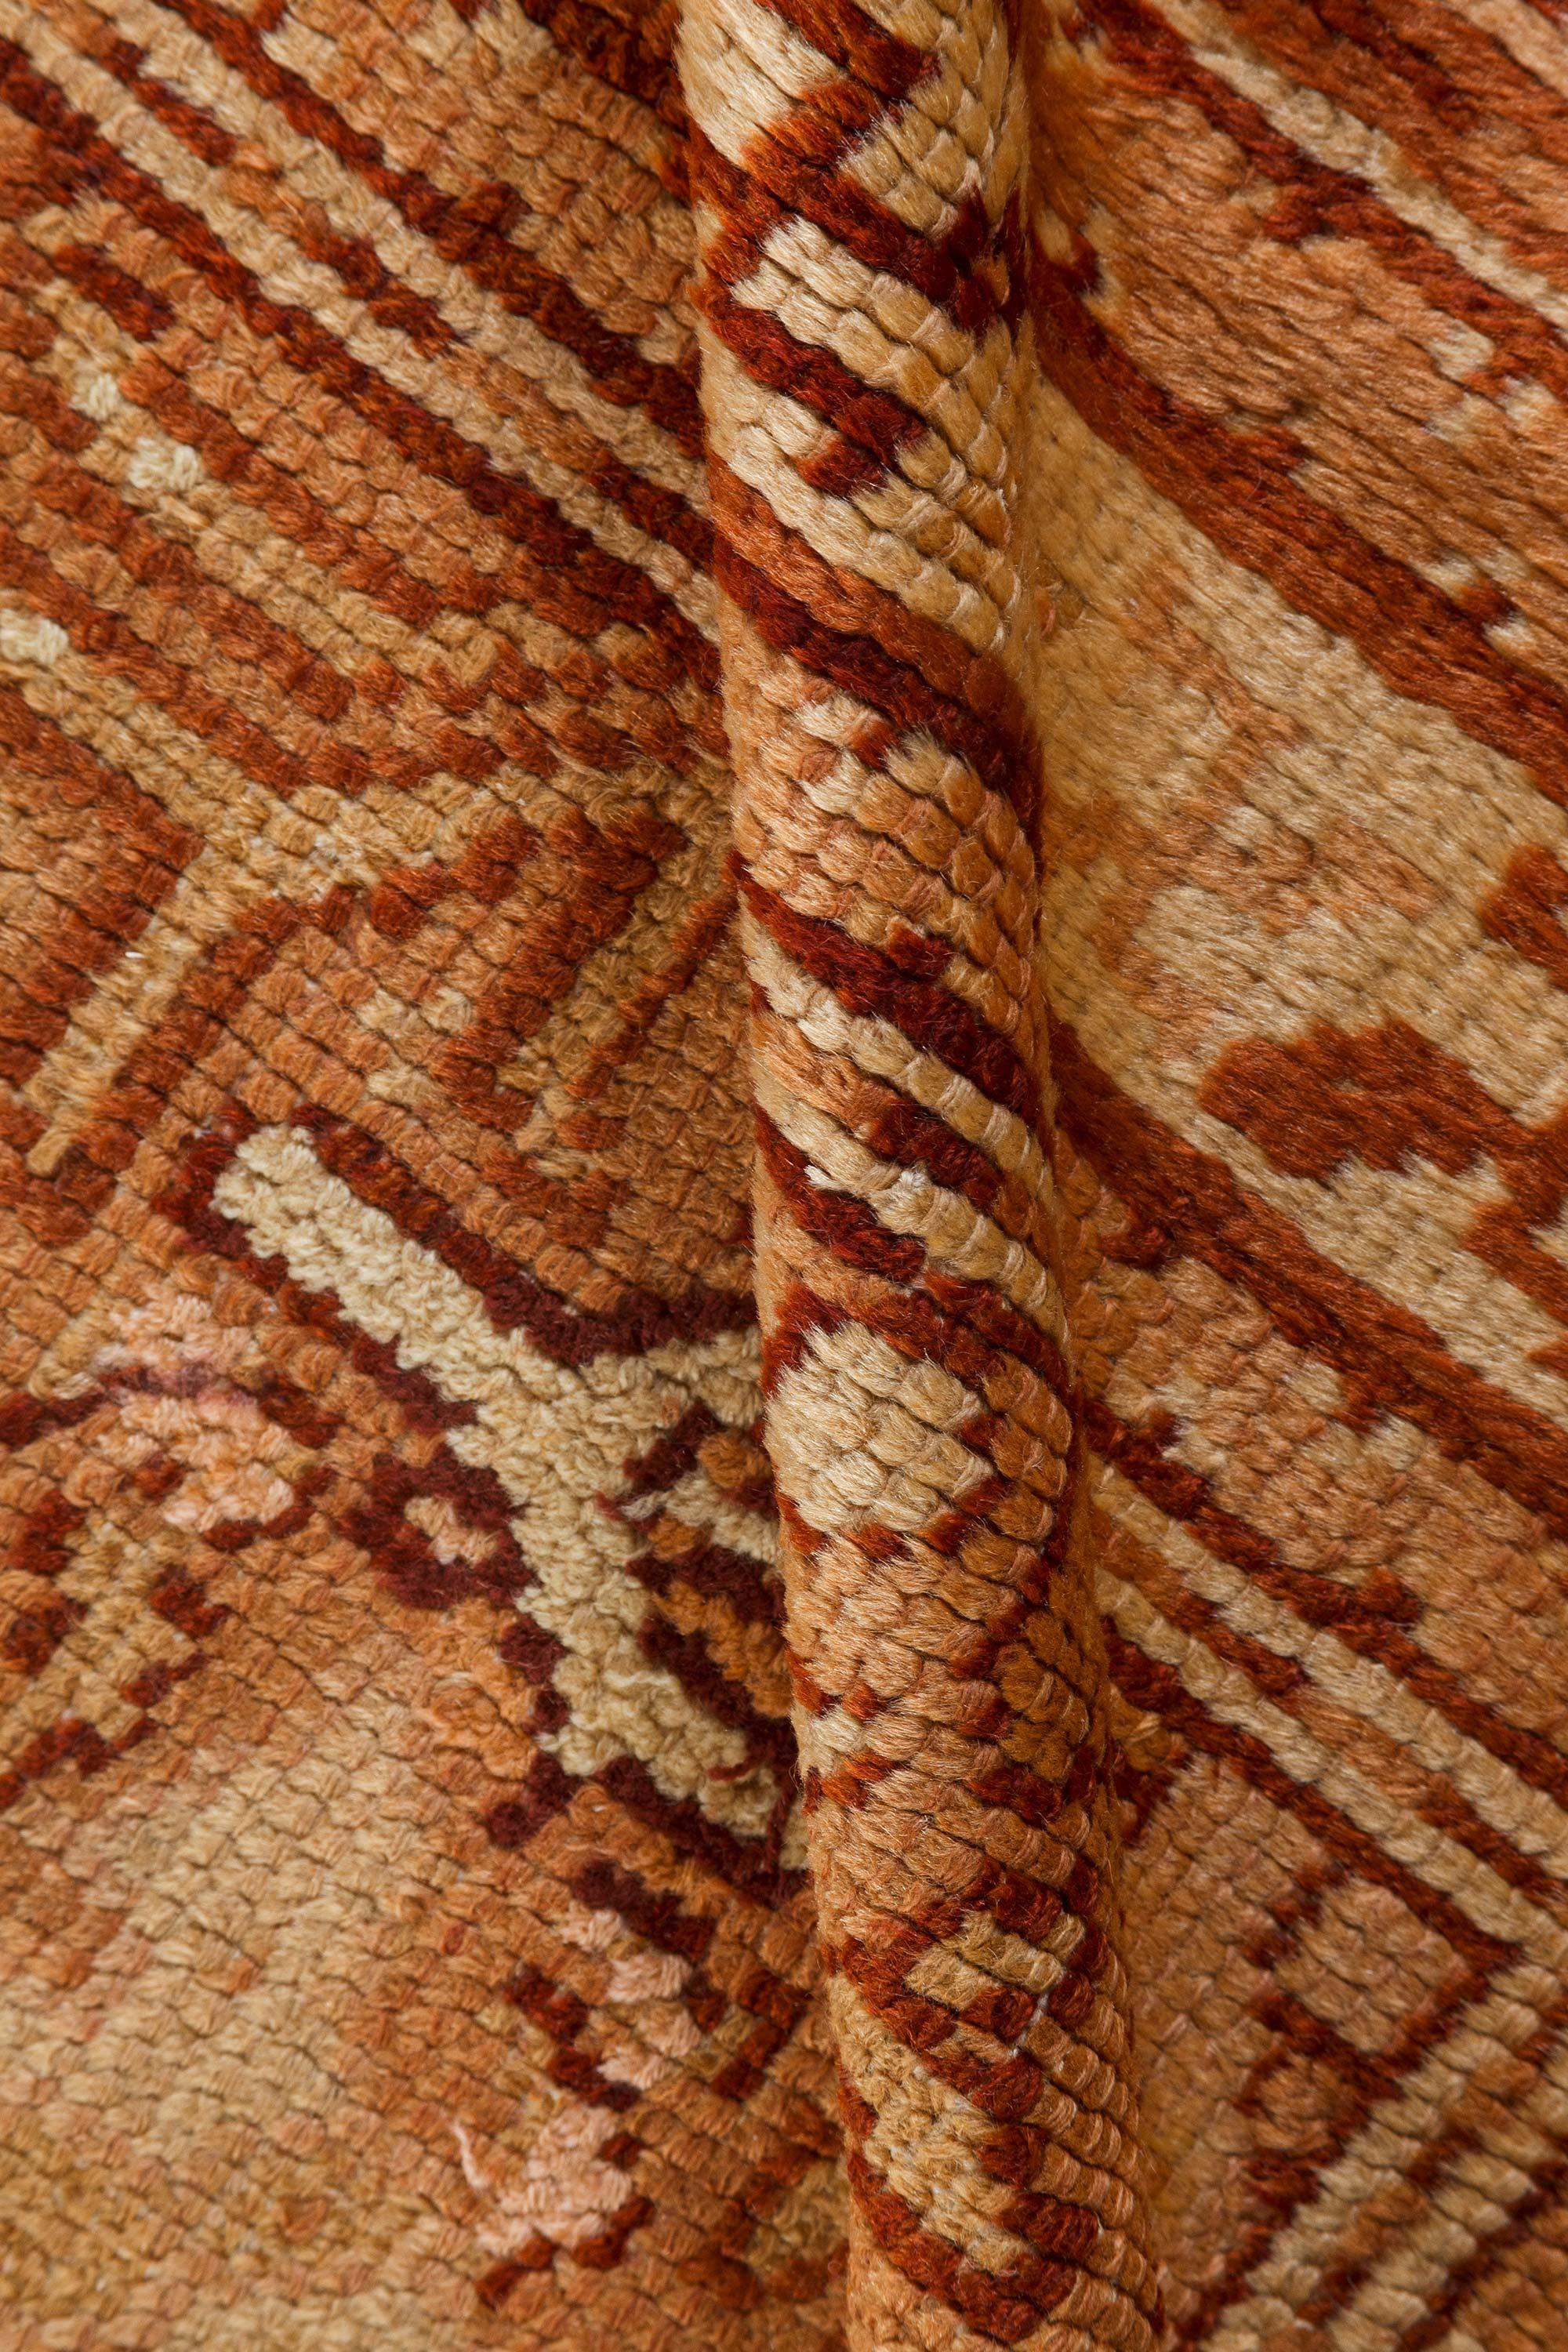 Early 20th century Oushak handmade wool rug
Size: 11'8